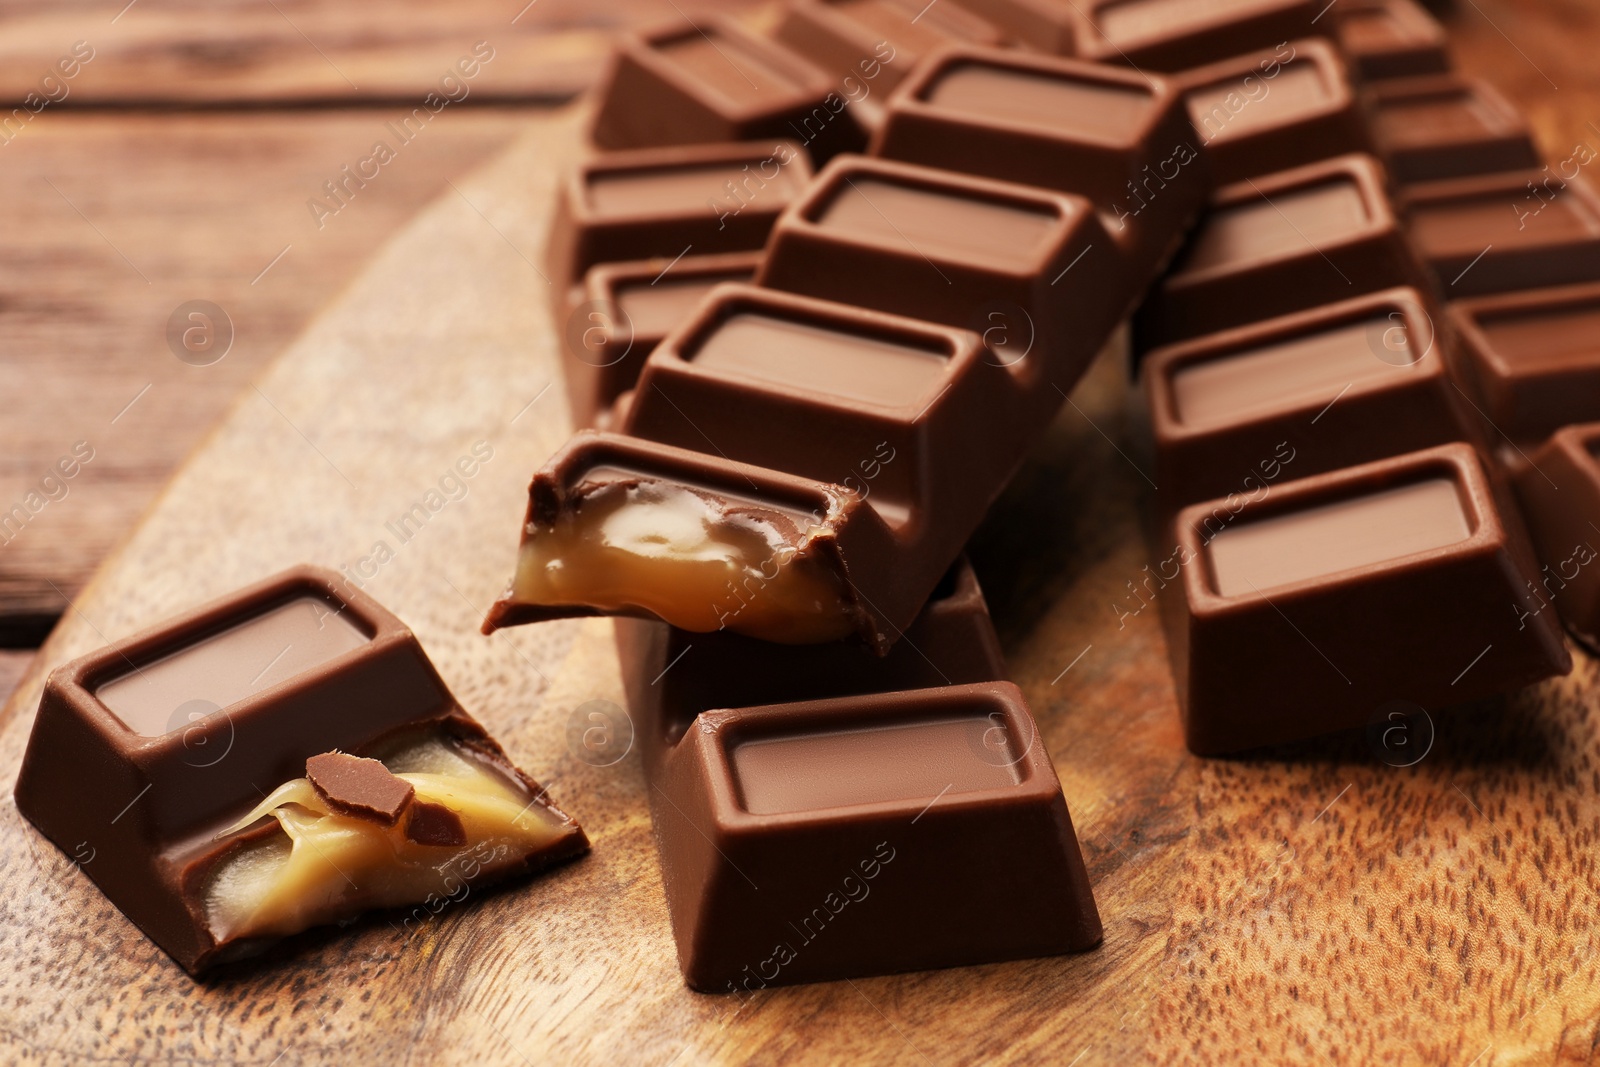 Photo of Tasty chocolate bars on wooden board, closeup